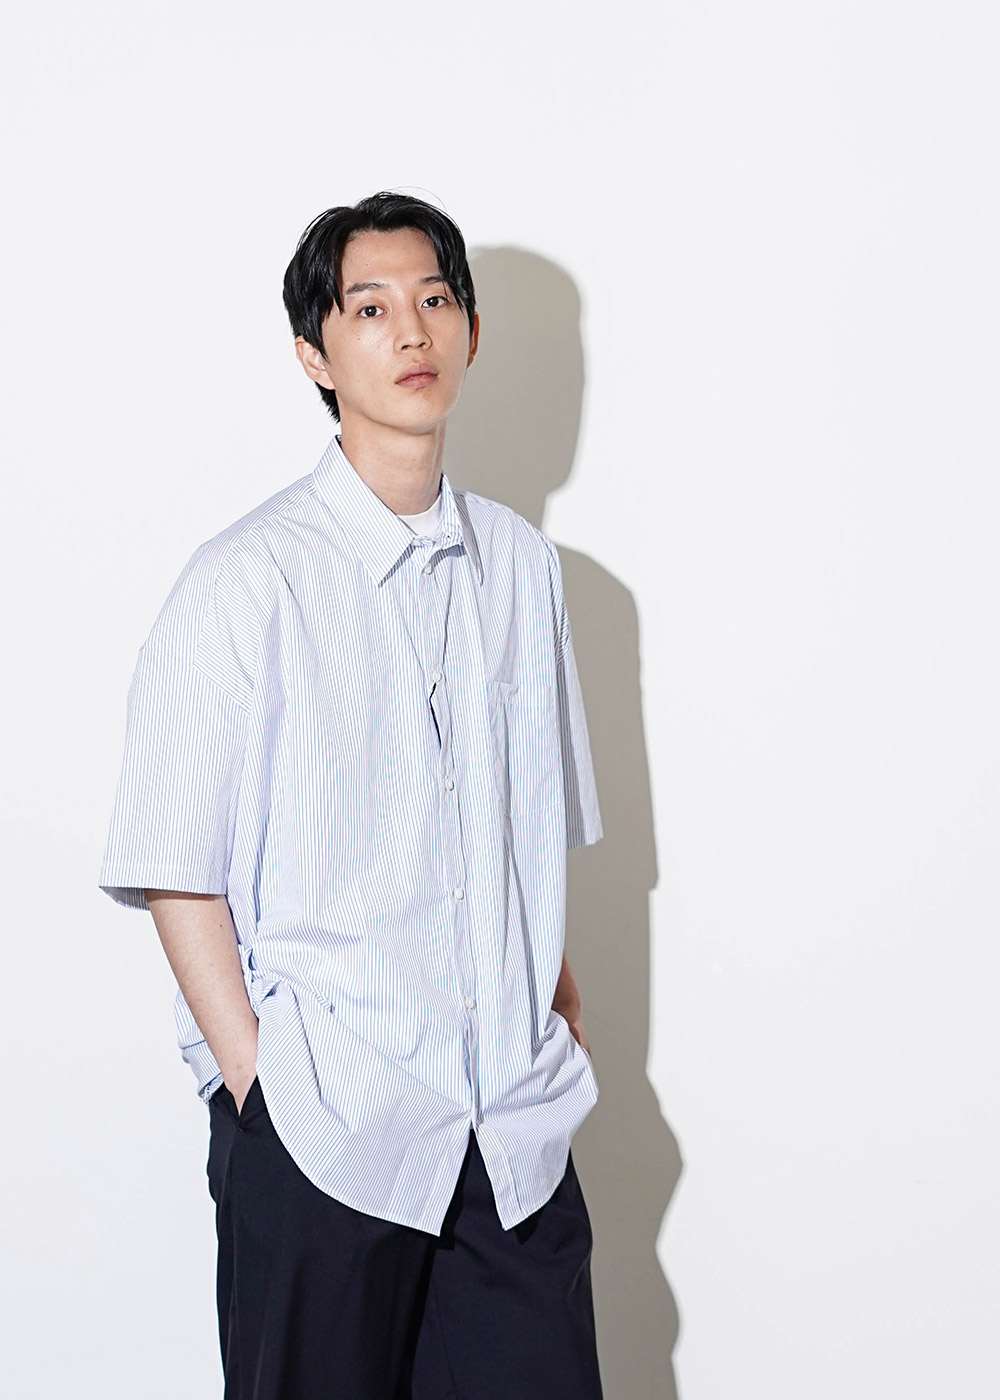 Atelier Made - Short Sleeve Shirts (White x Blue)